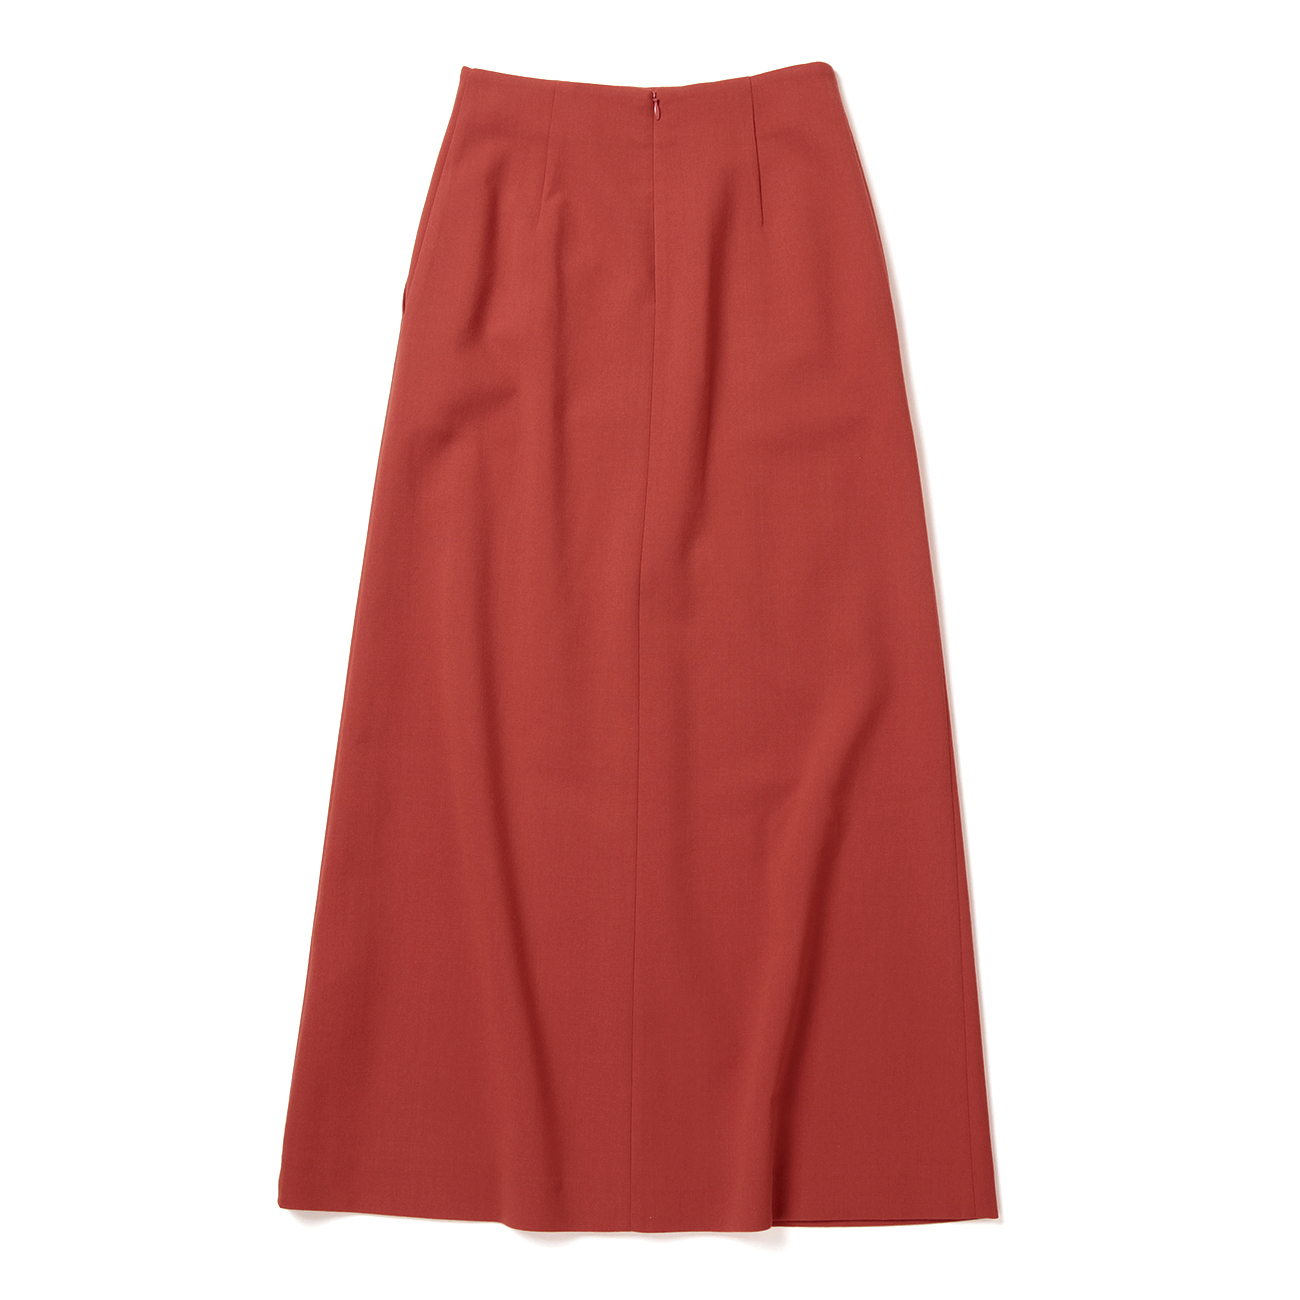 TENSE WOOL DOUBLE CLOTH SKIRT (レディース) - Red Orange